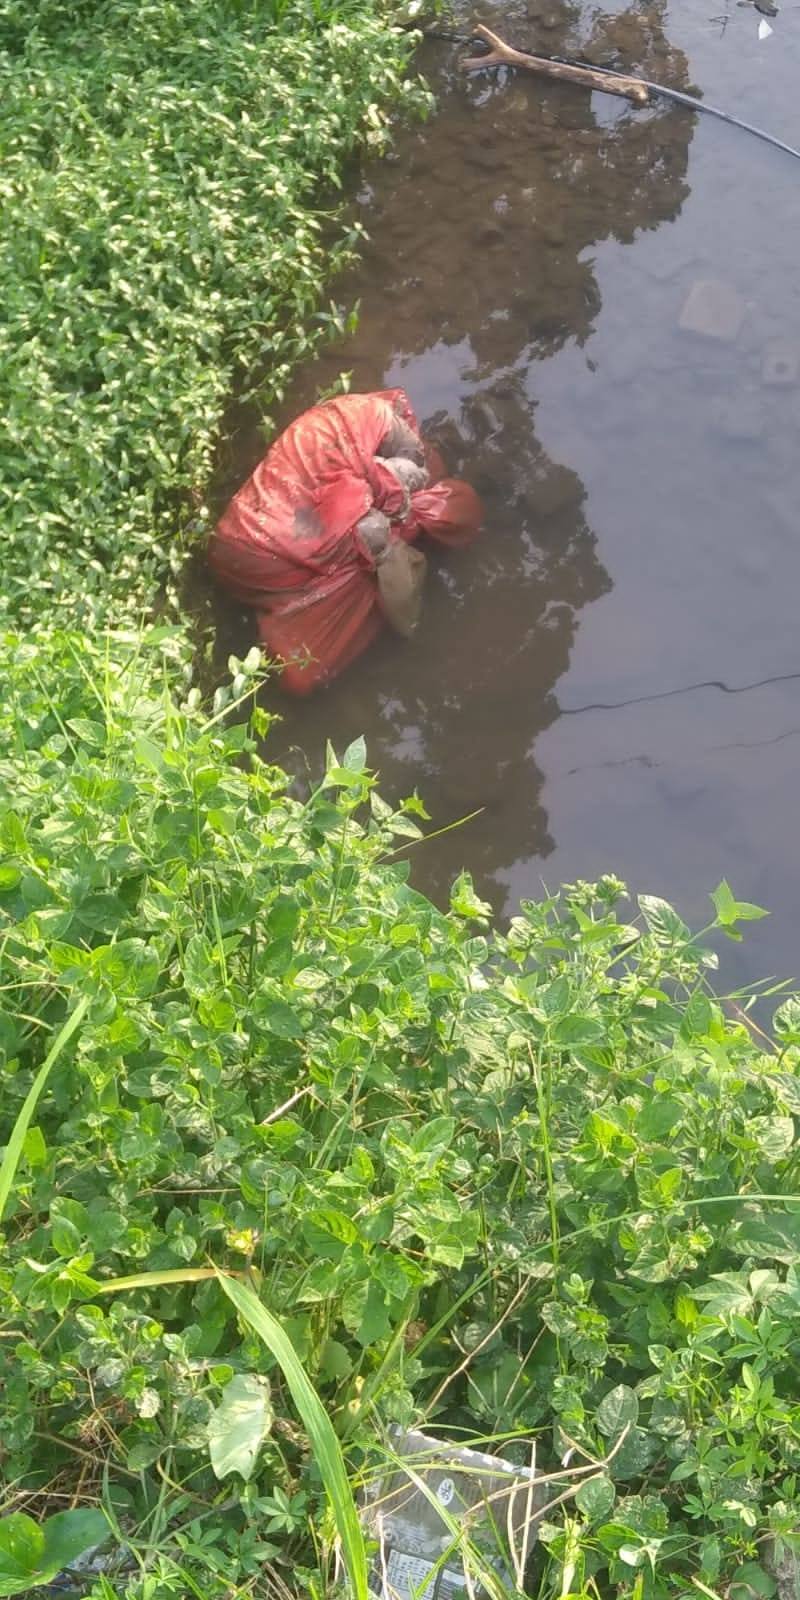 Body wrapped in a cloth found in a stream in Phoenix